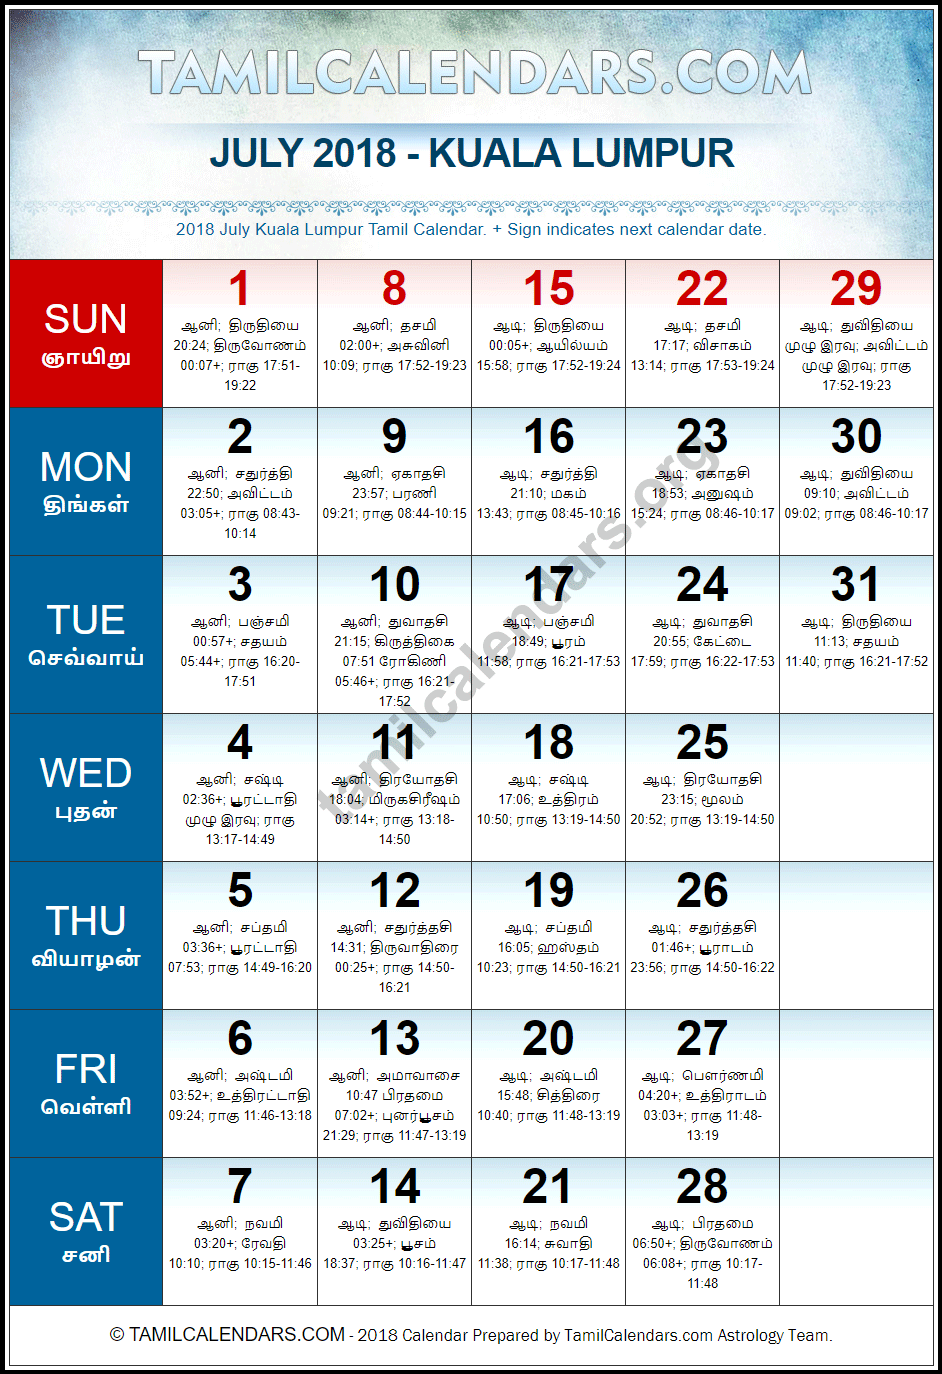 July 2018 Tamil Calendar for Malaysia (Kuala Lumpur)